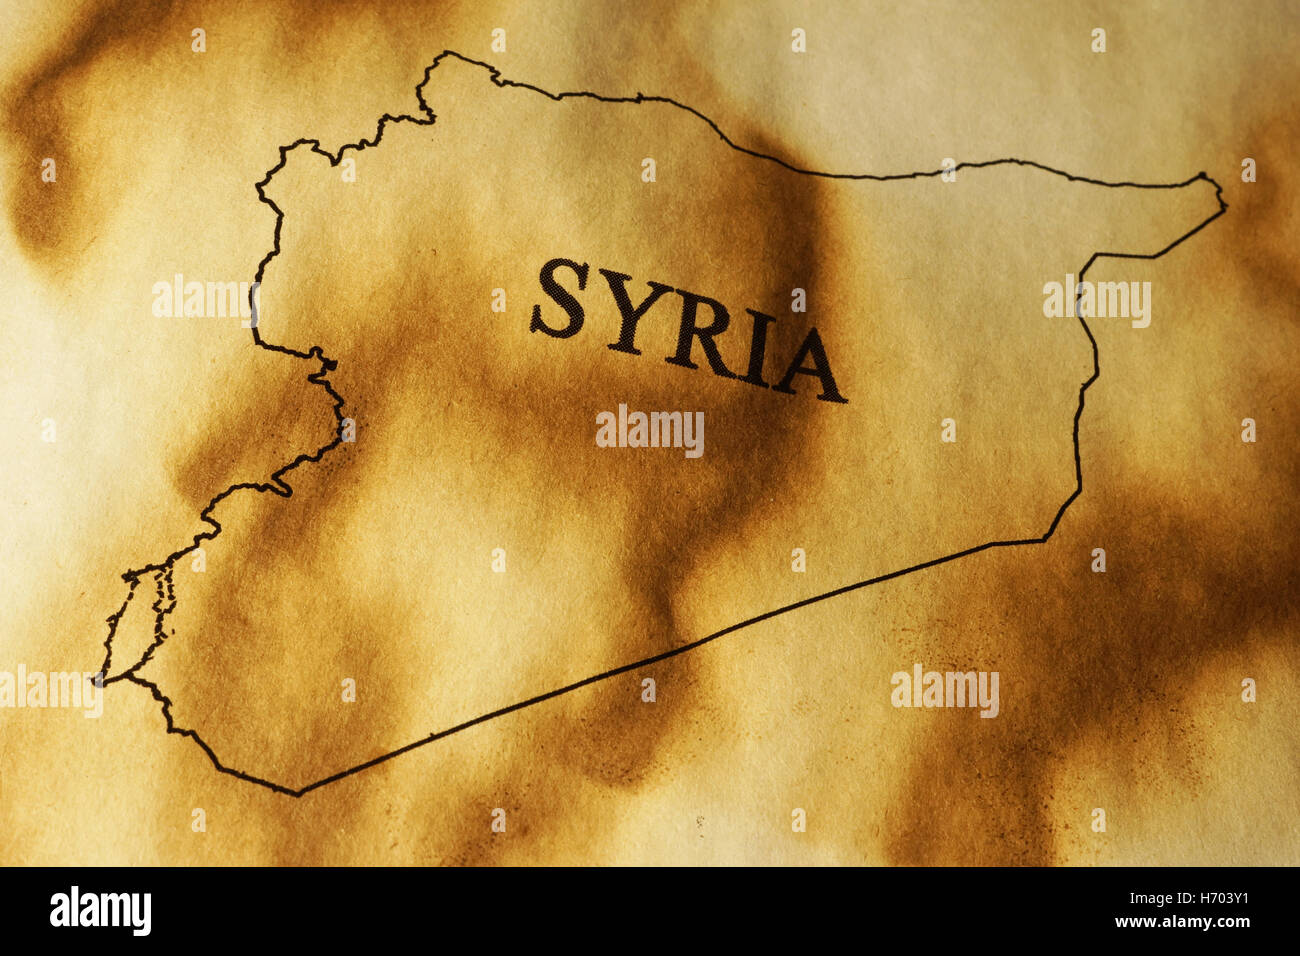 Mapa de Siria en un papel carbonizados. Concepto de conflicto sirio Foto de stock